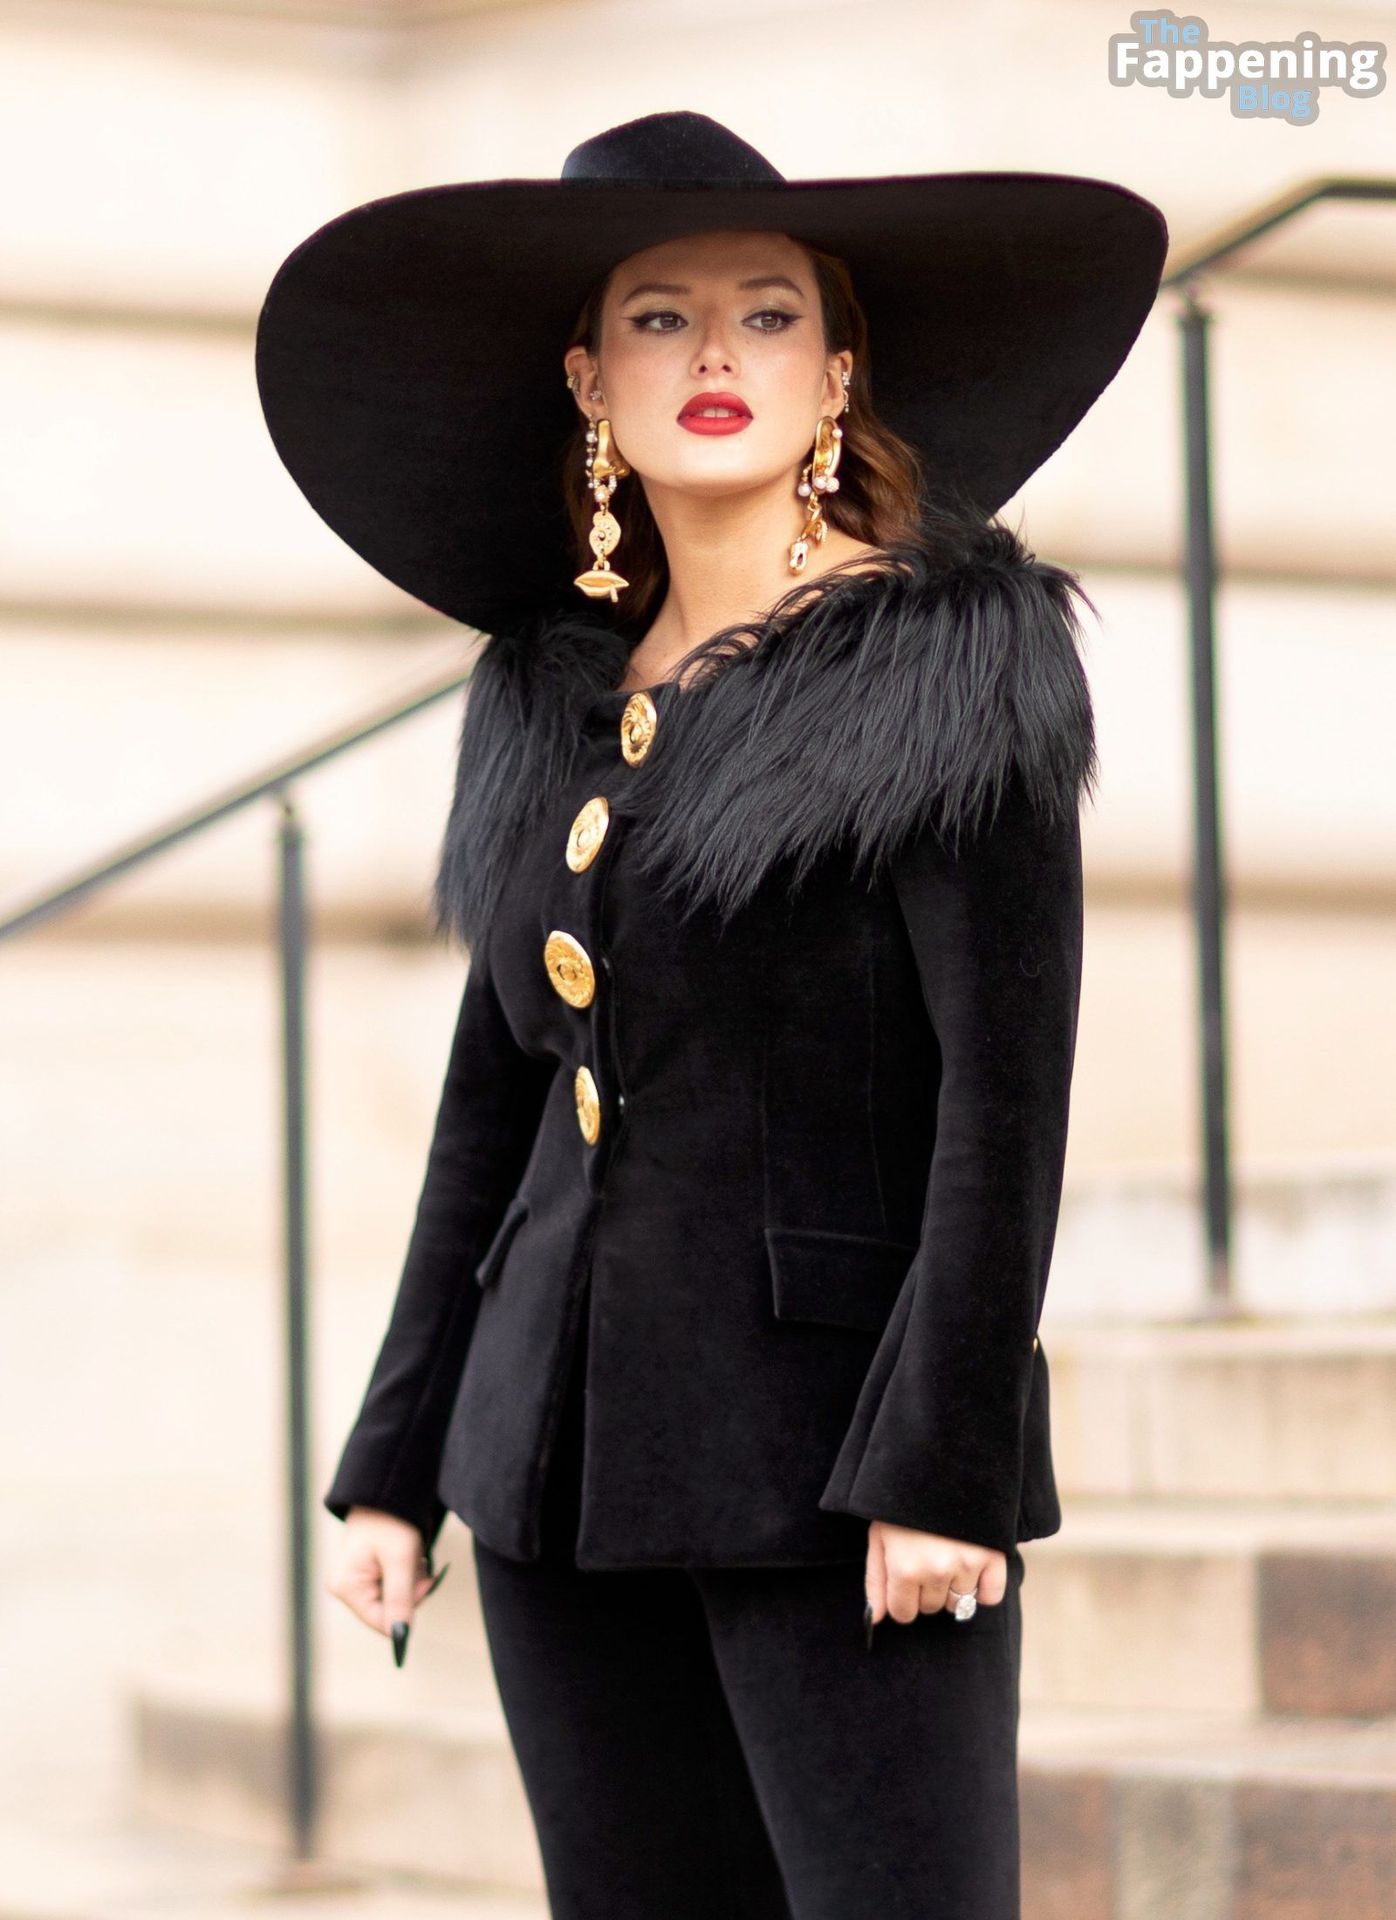 bella-thorne-paris-fashion-week-glamour-1-thefappeningblog.com_.jpg